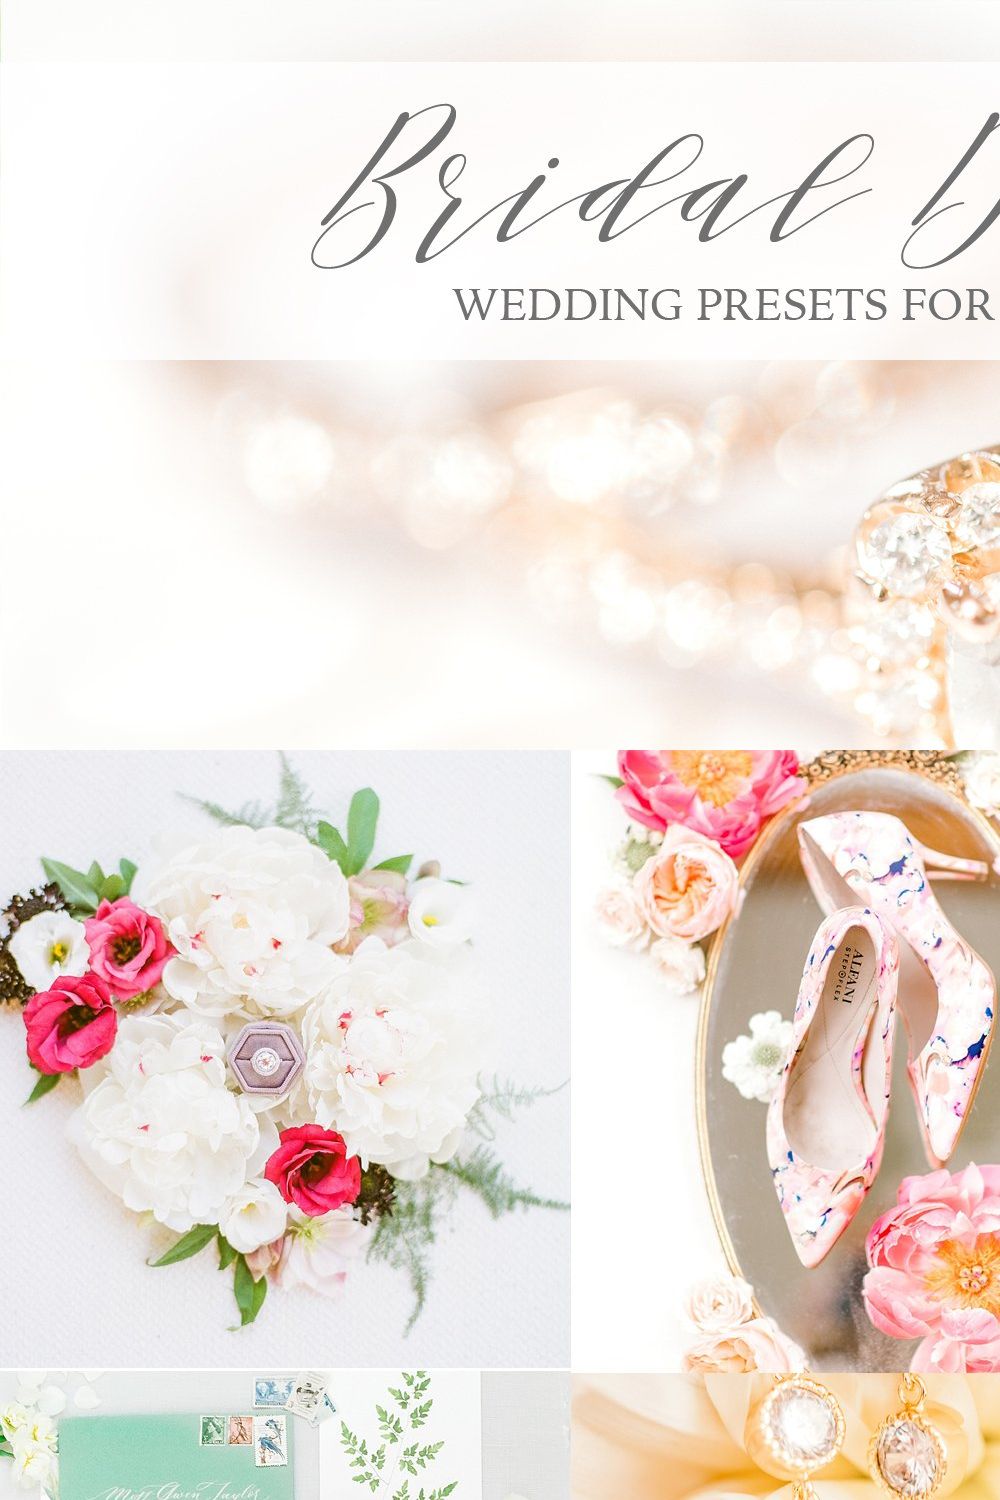 Bridal Details & Wedding Presets pinterest preview image.